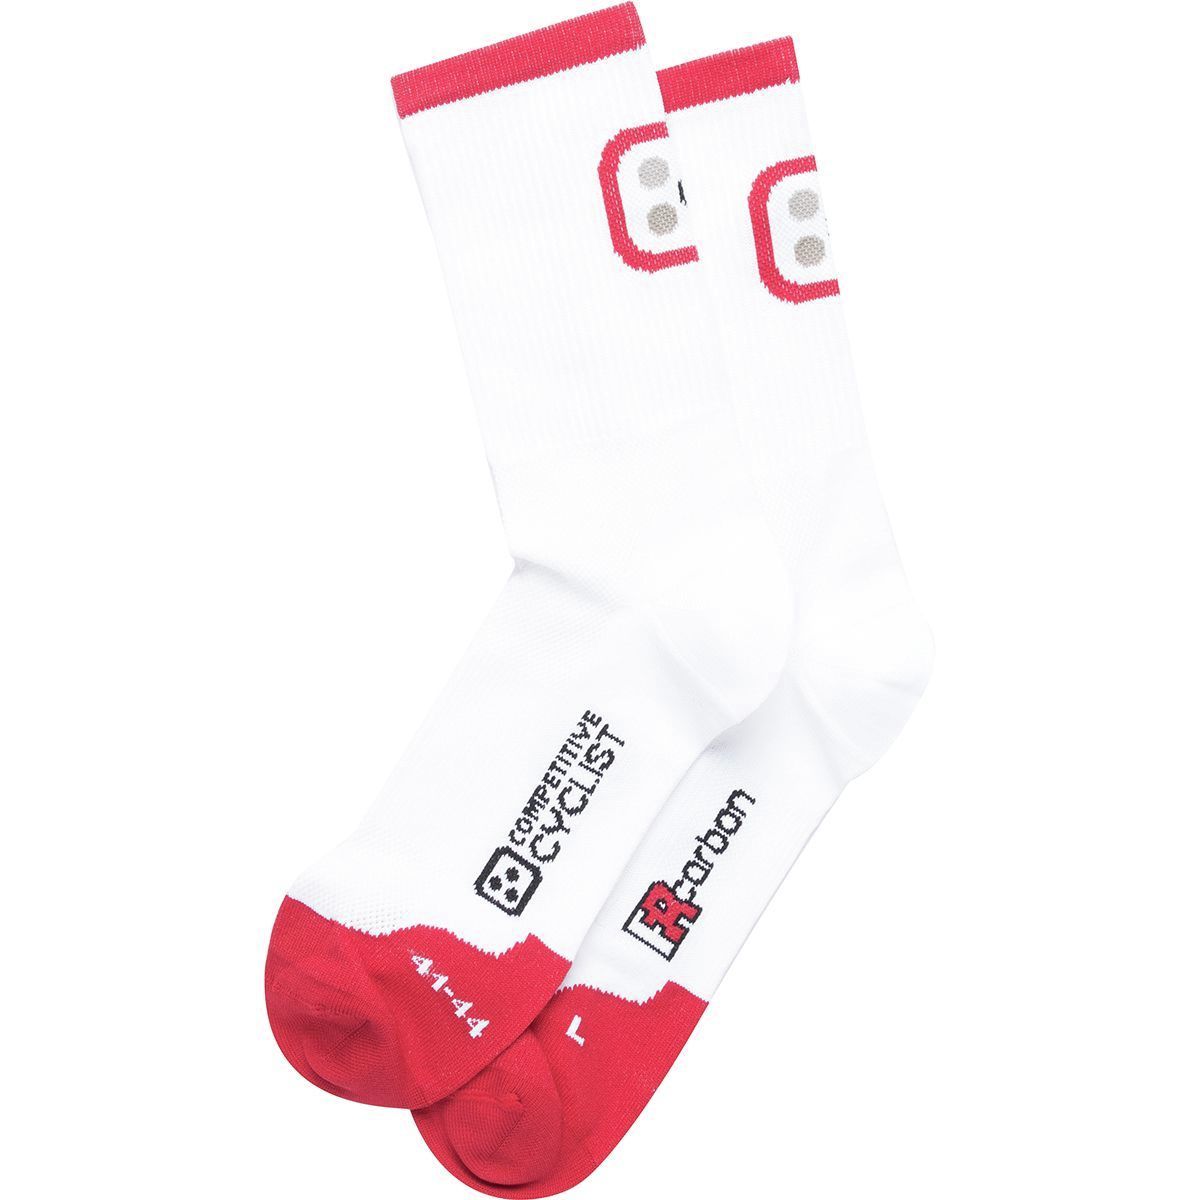 Giordana Competitive Cyclist FR-C Tall Cuff Socks - Men's